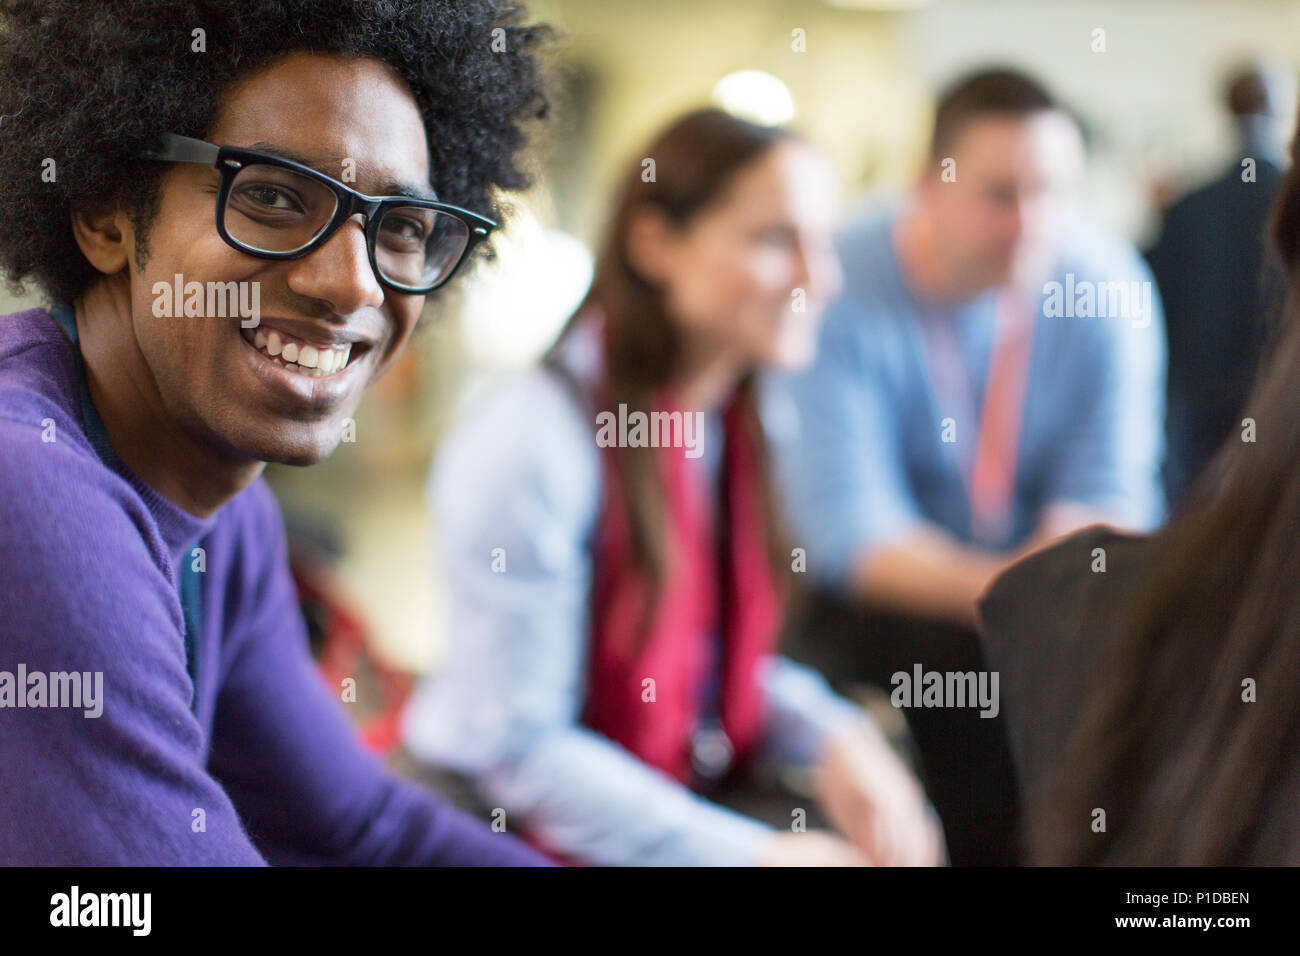 Portrait smiling, confident businessman in eyeglasses Stock Photo